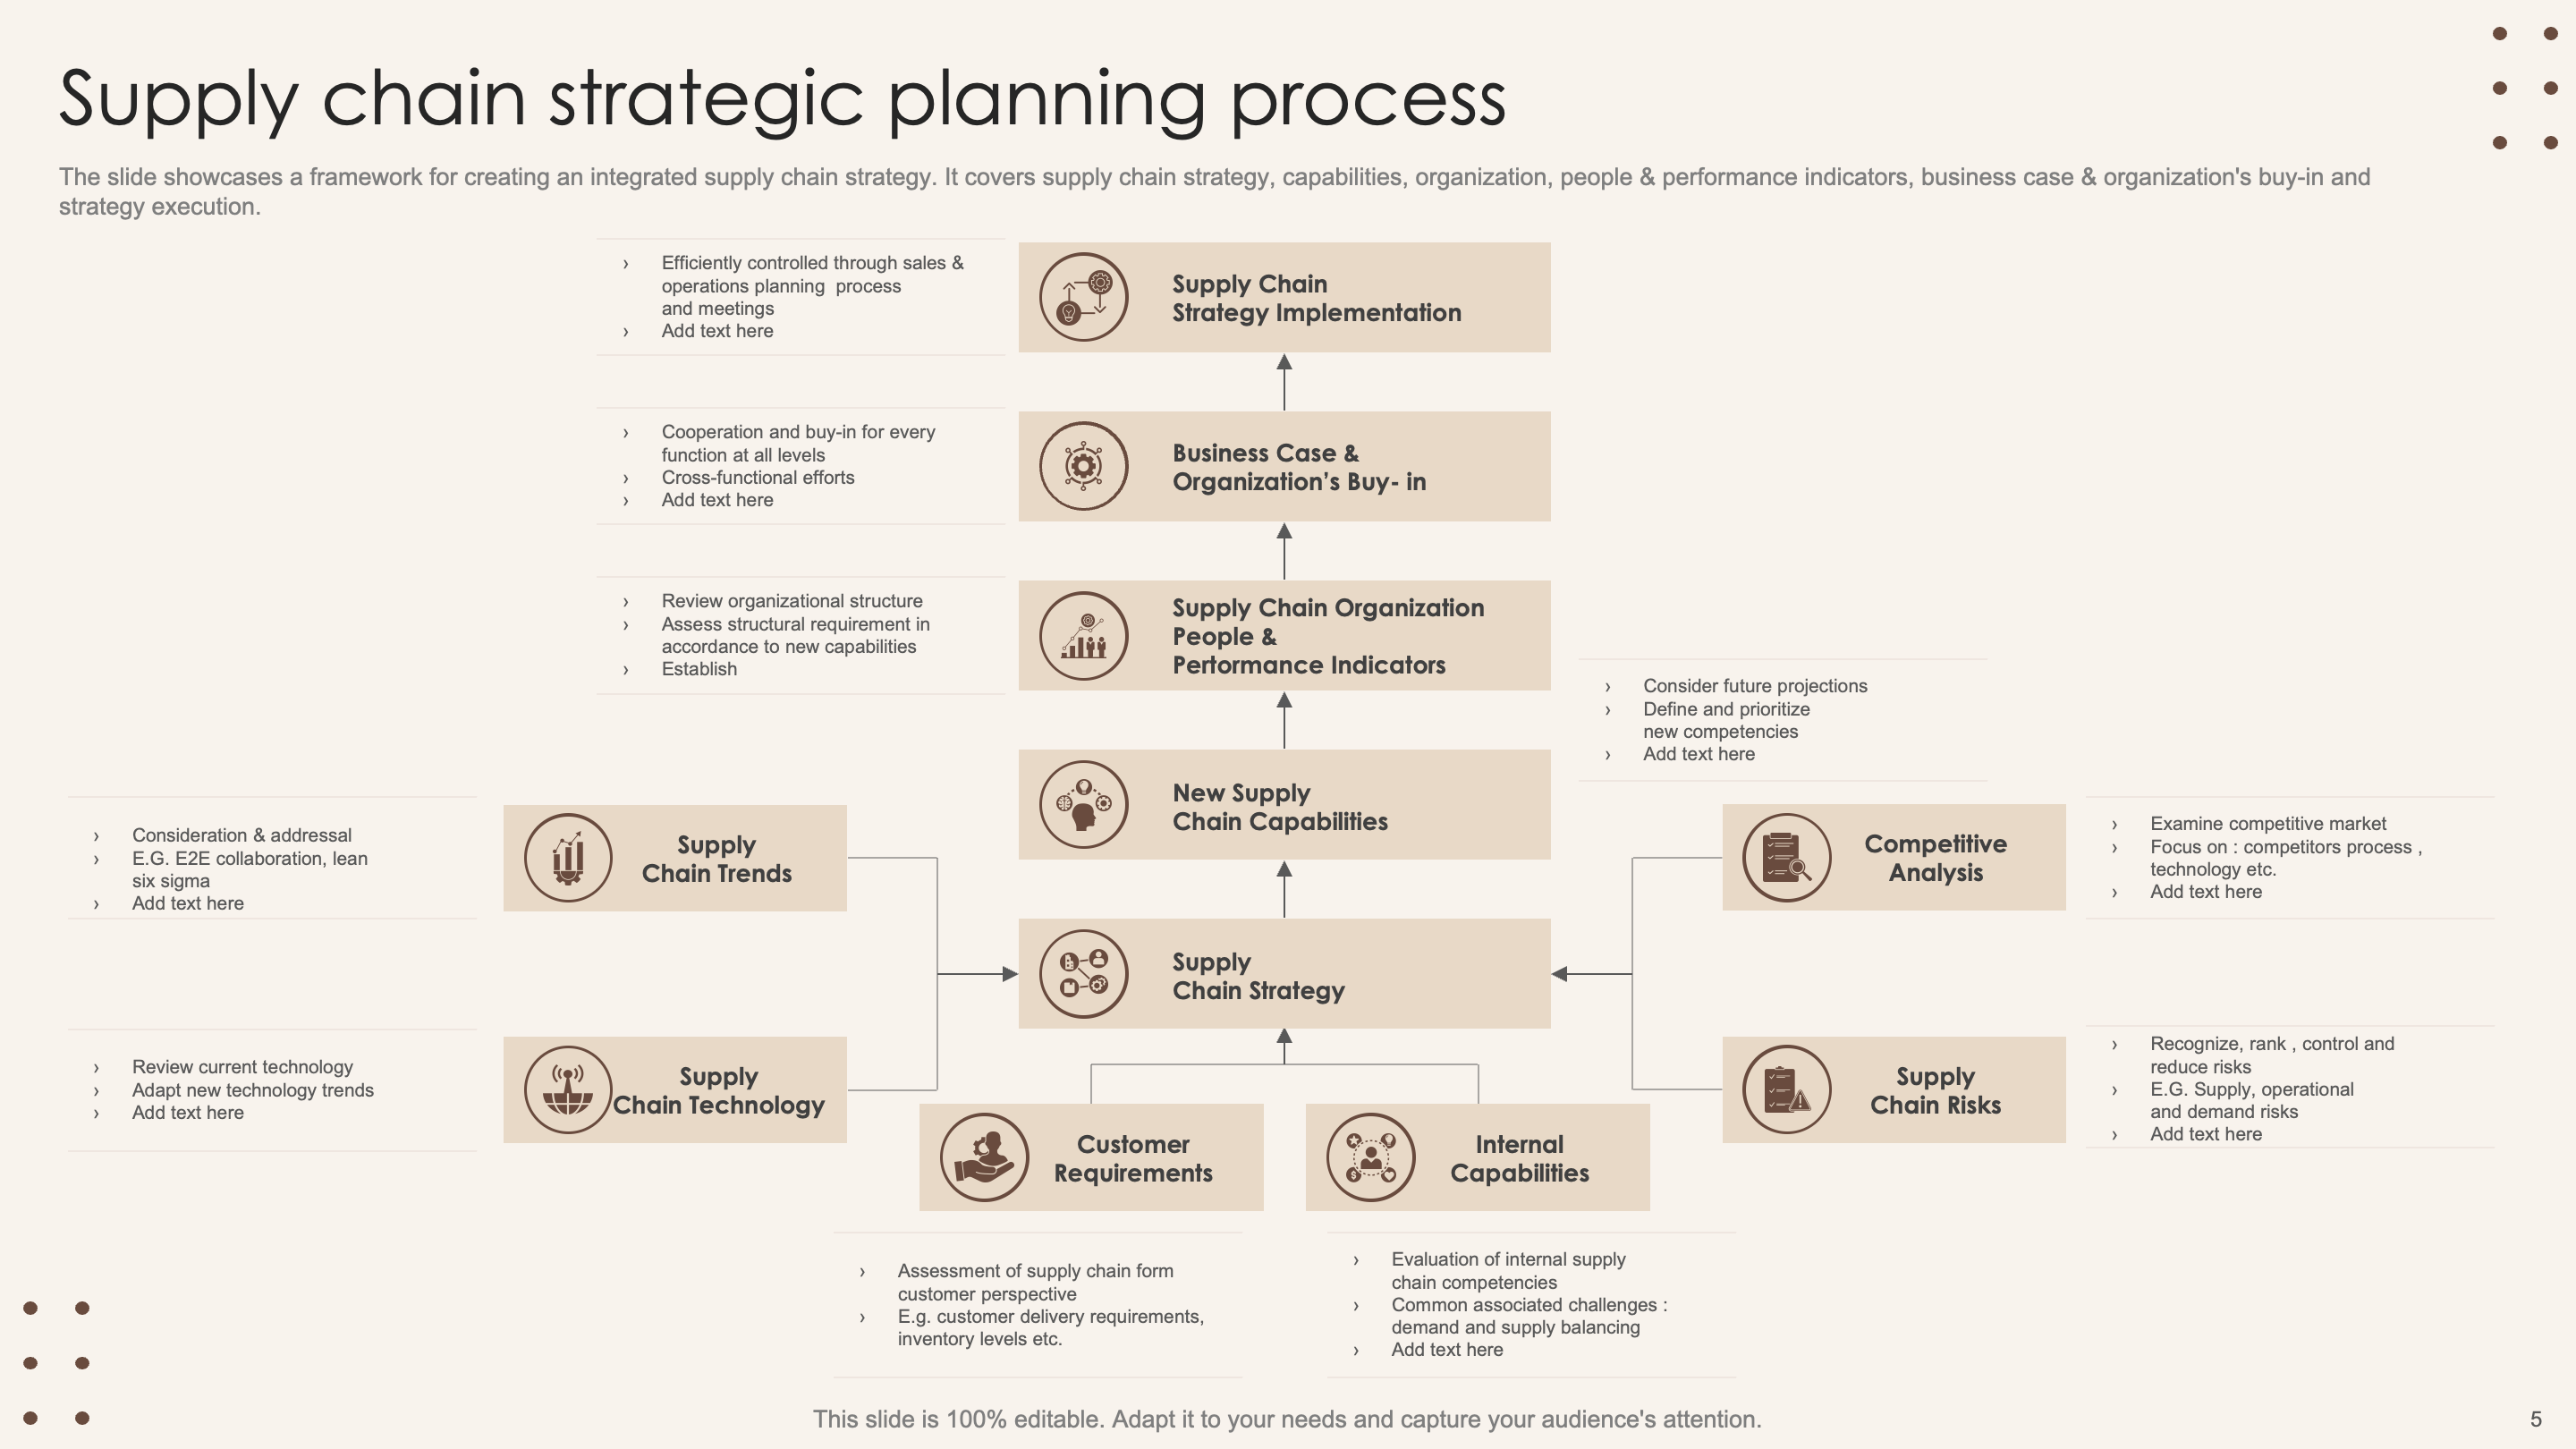 Supply chain strategic planning process 